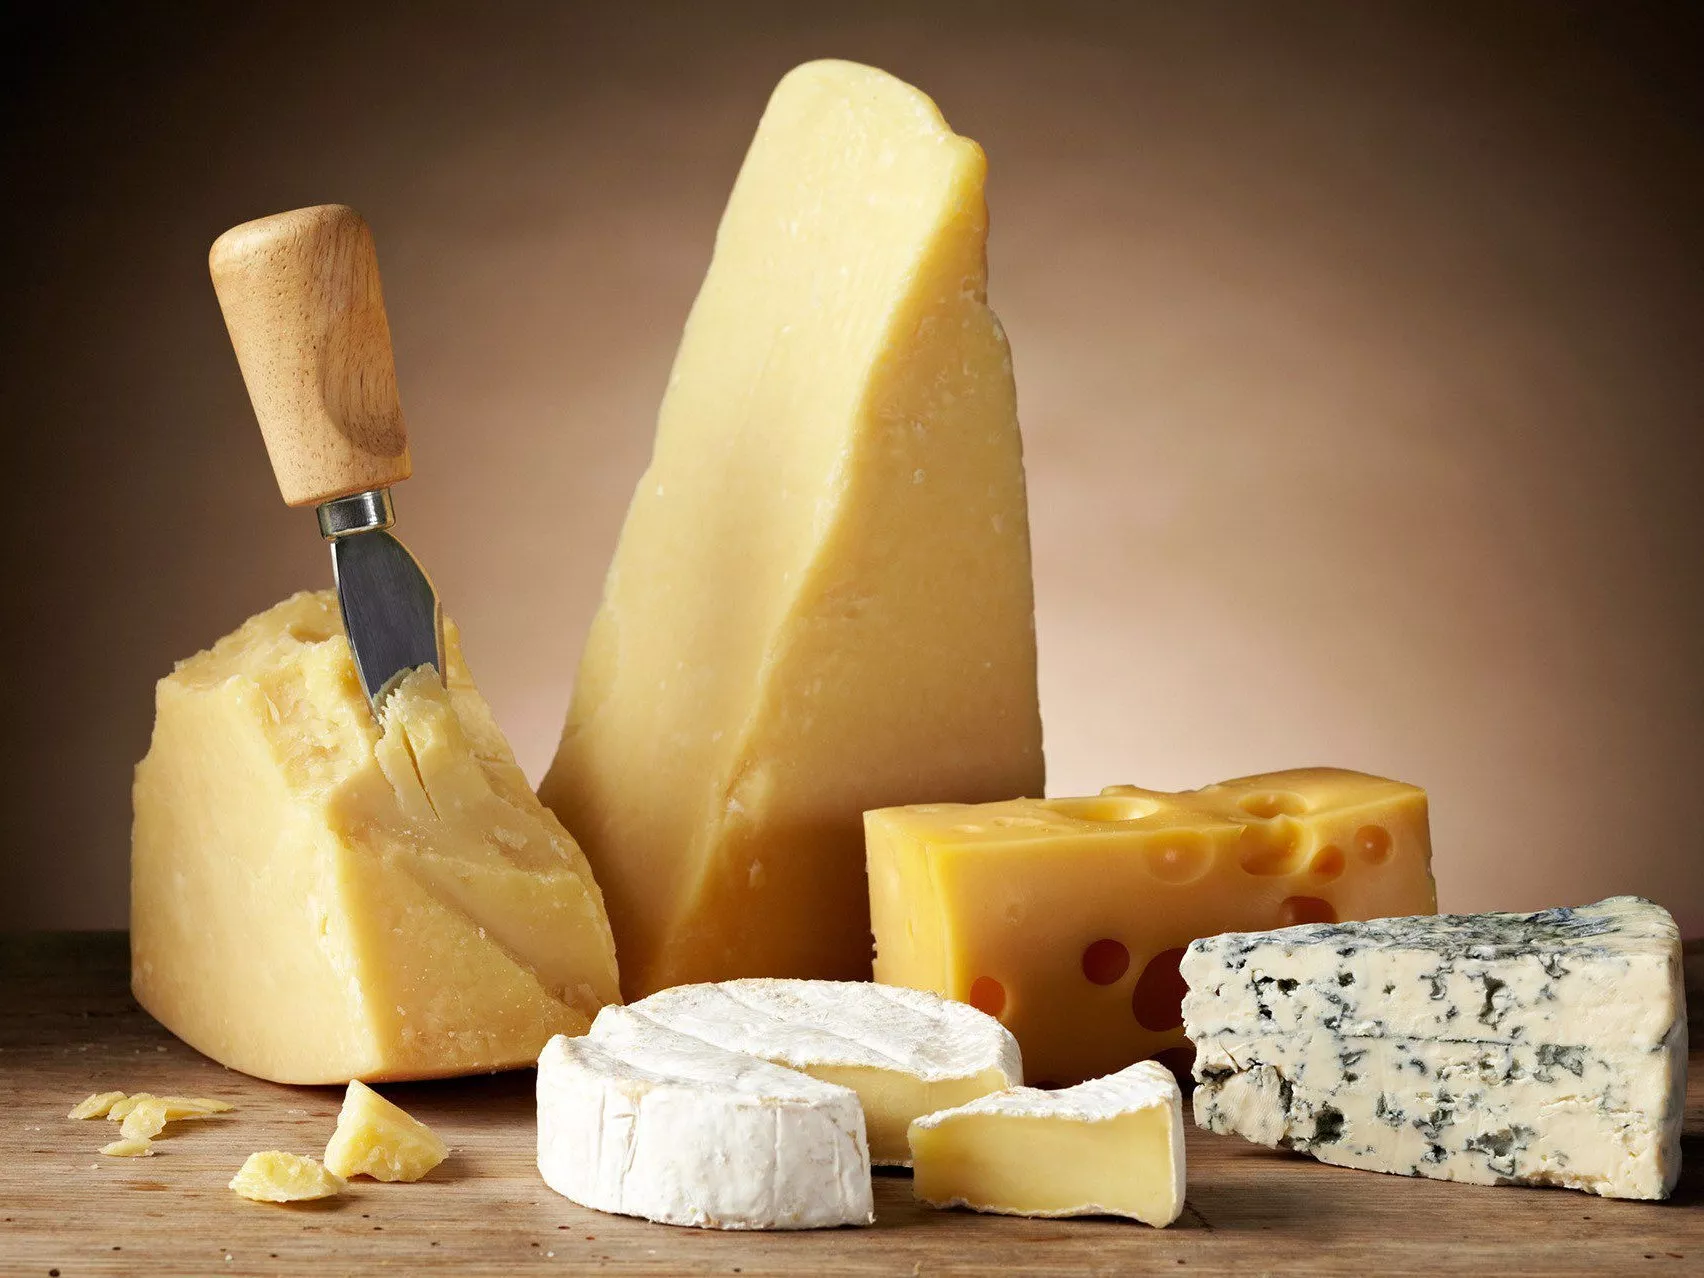 Chevrerie Au Coeur de Montjoie in France, Europe | Cheesemakers - Rated 1